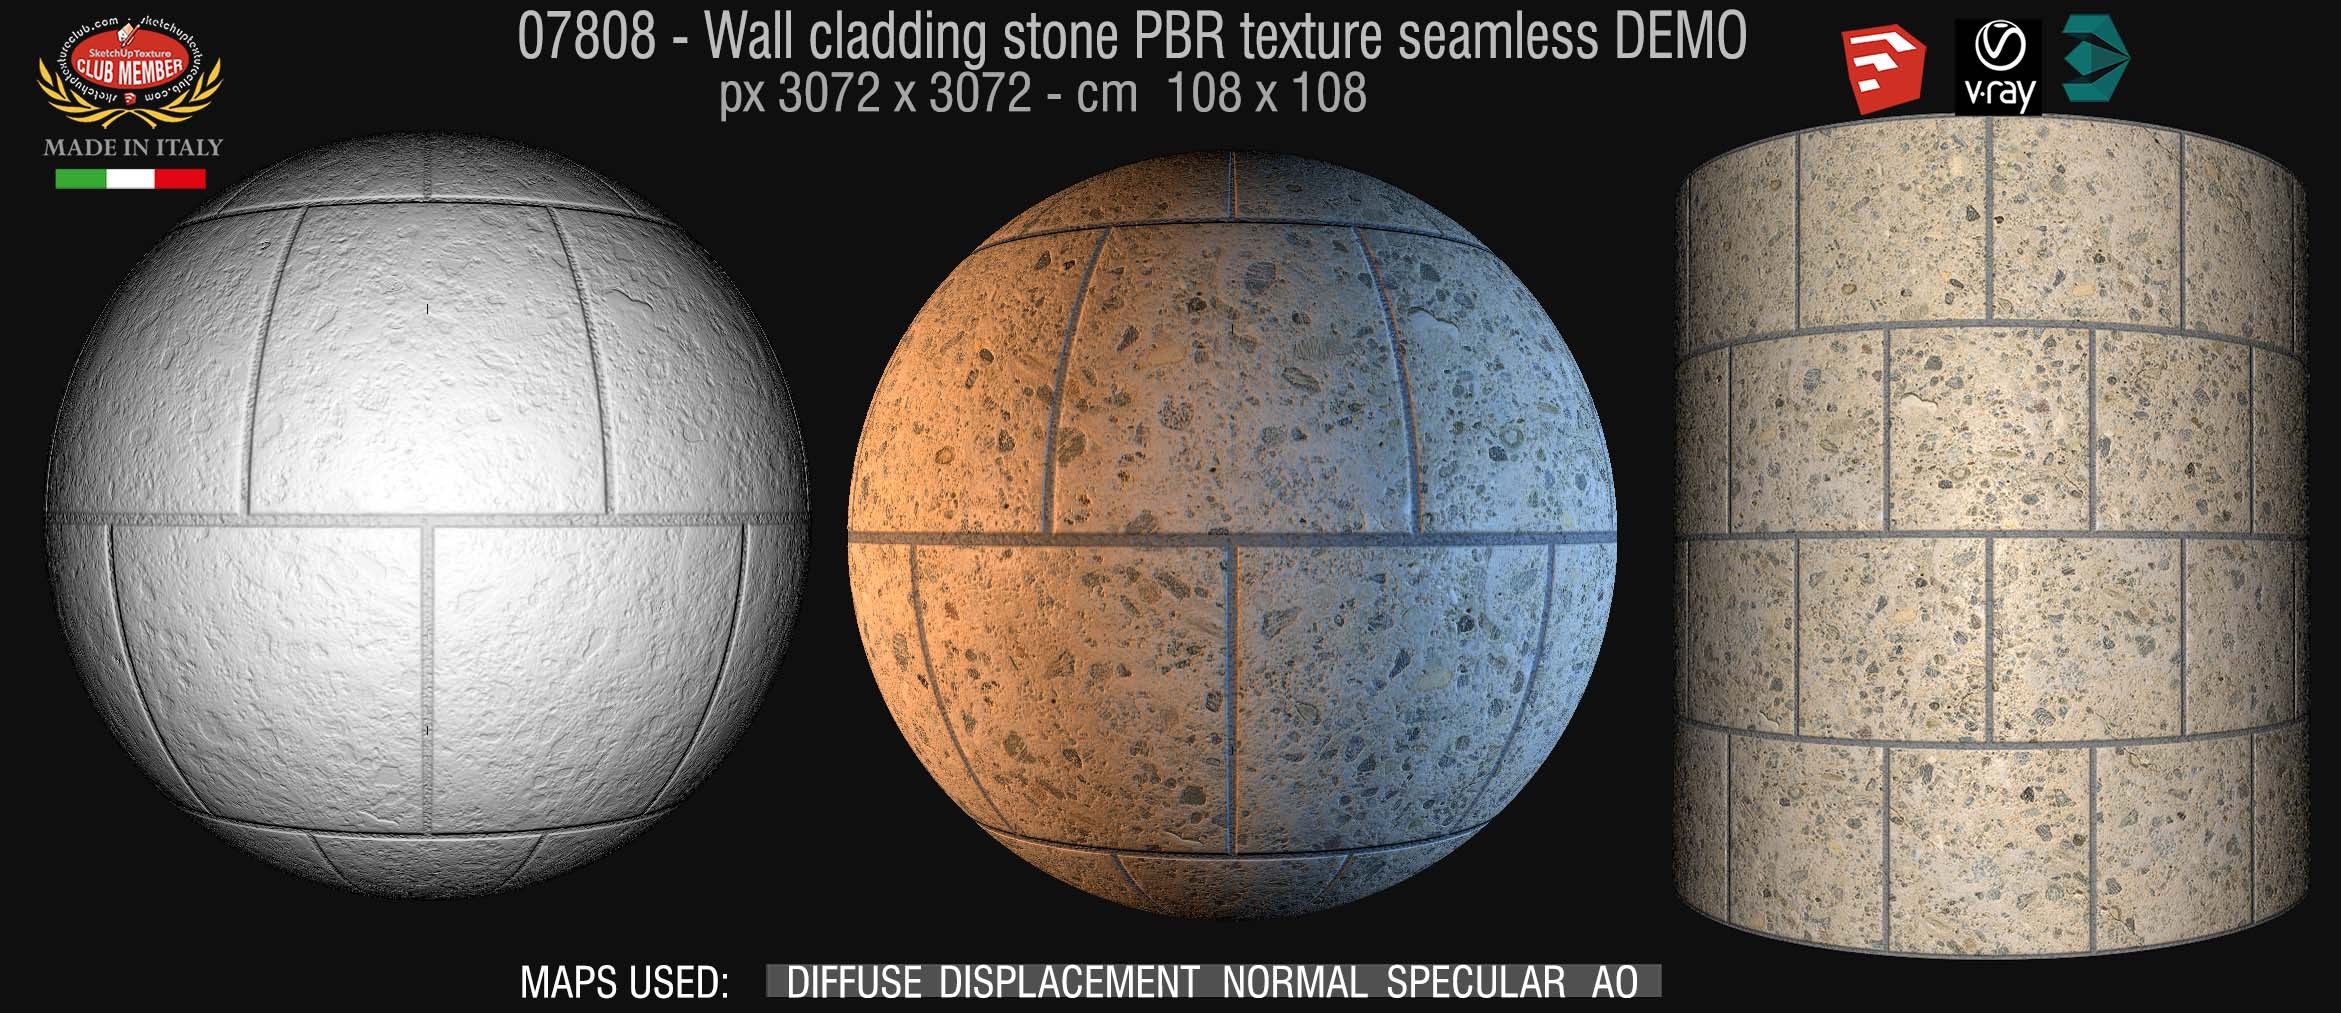 07808 Wall cladding stone texture seamless DEMO